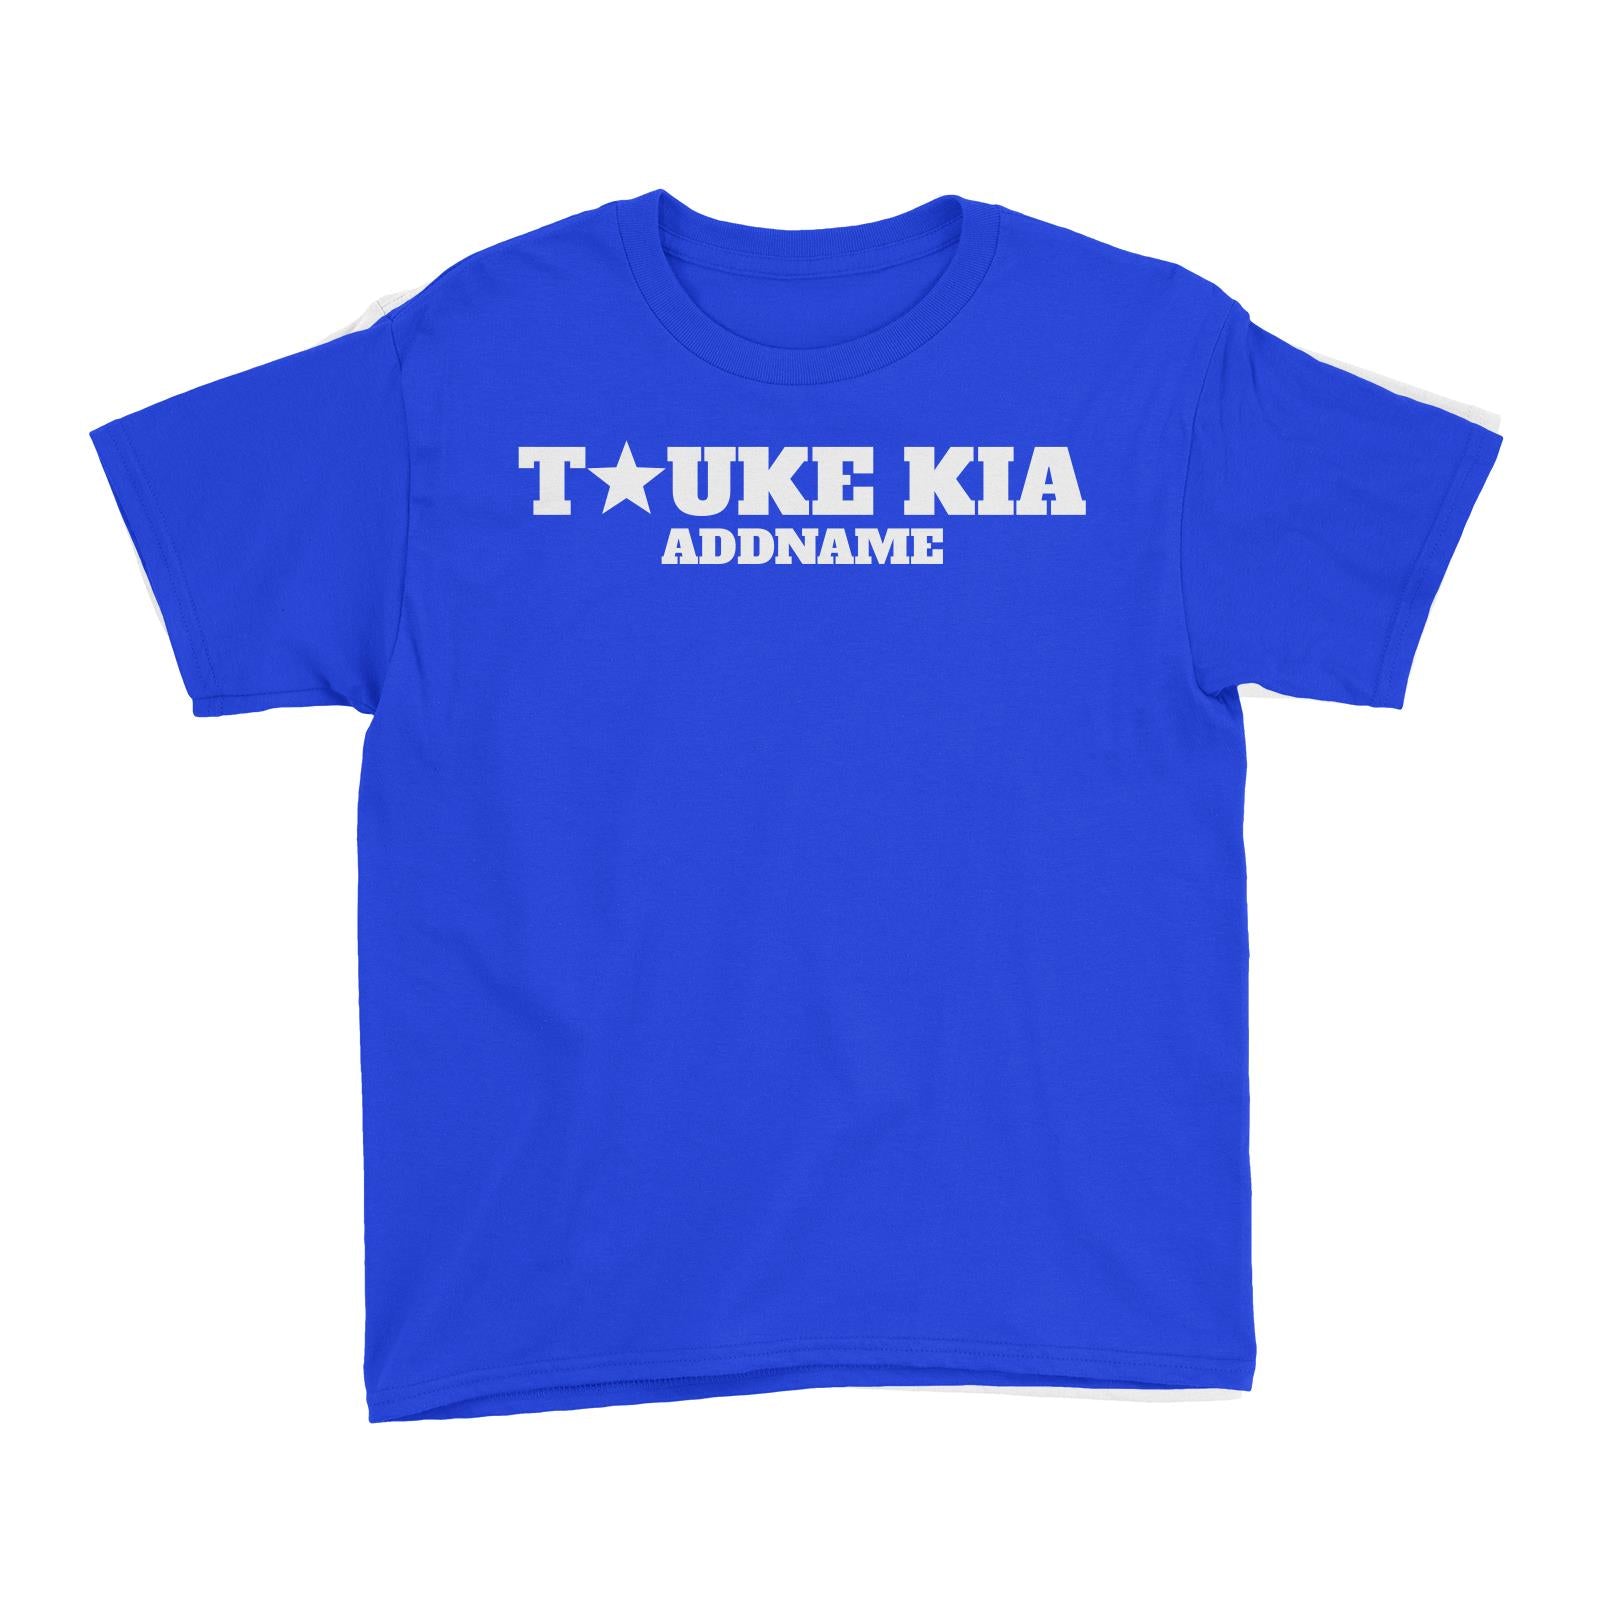 Tauke Kia Star Kid's T-Shirt